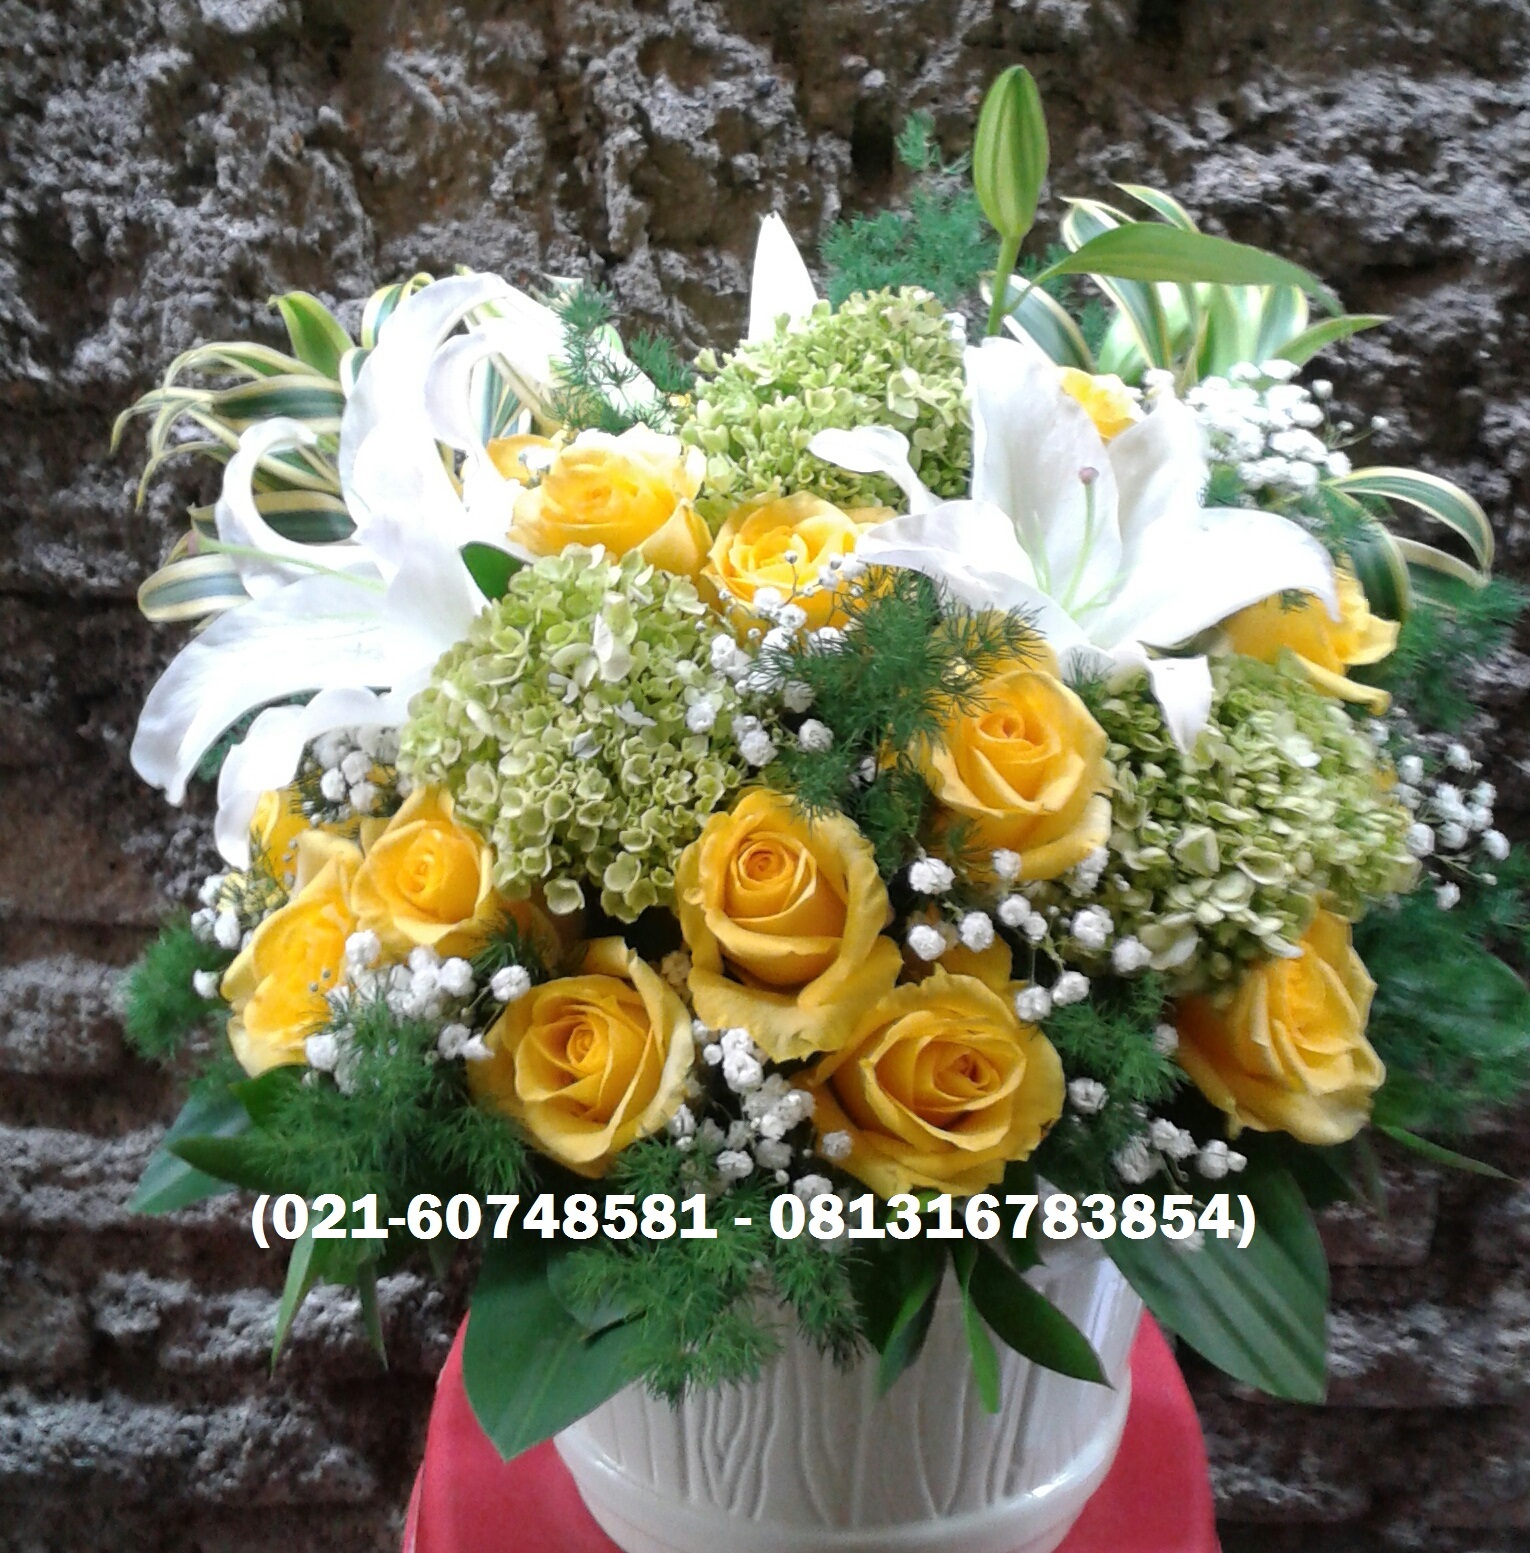 Rusty Florist Jakarta - Online Flower Shop: Rangkaian ...